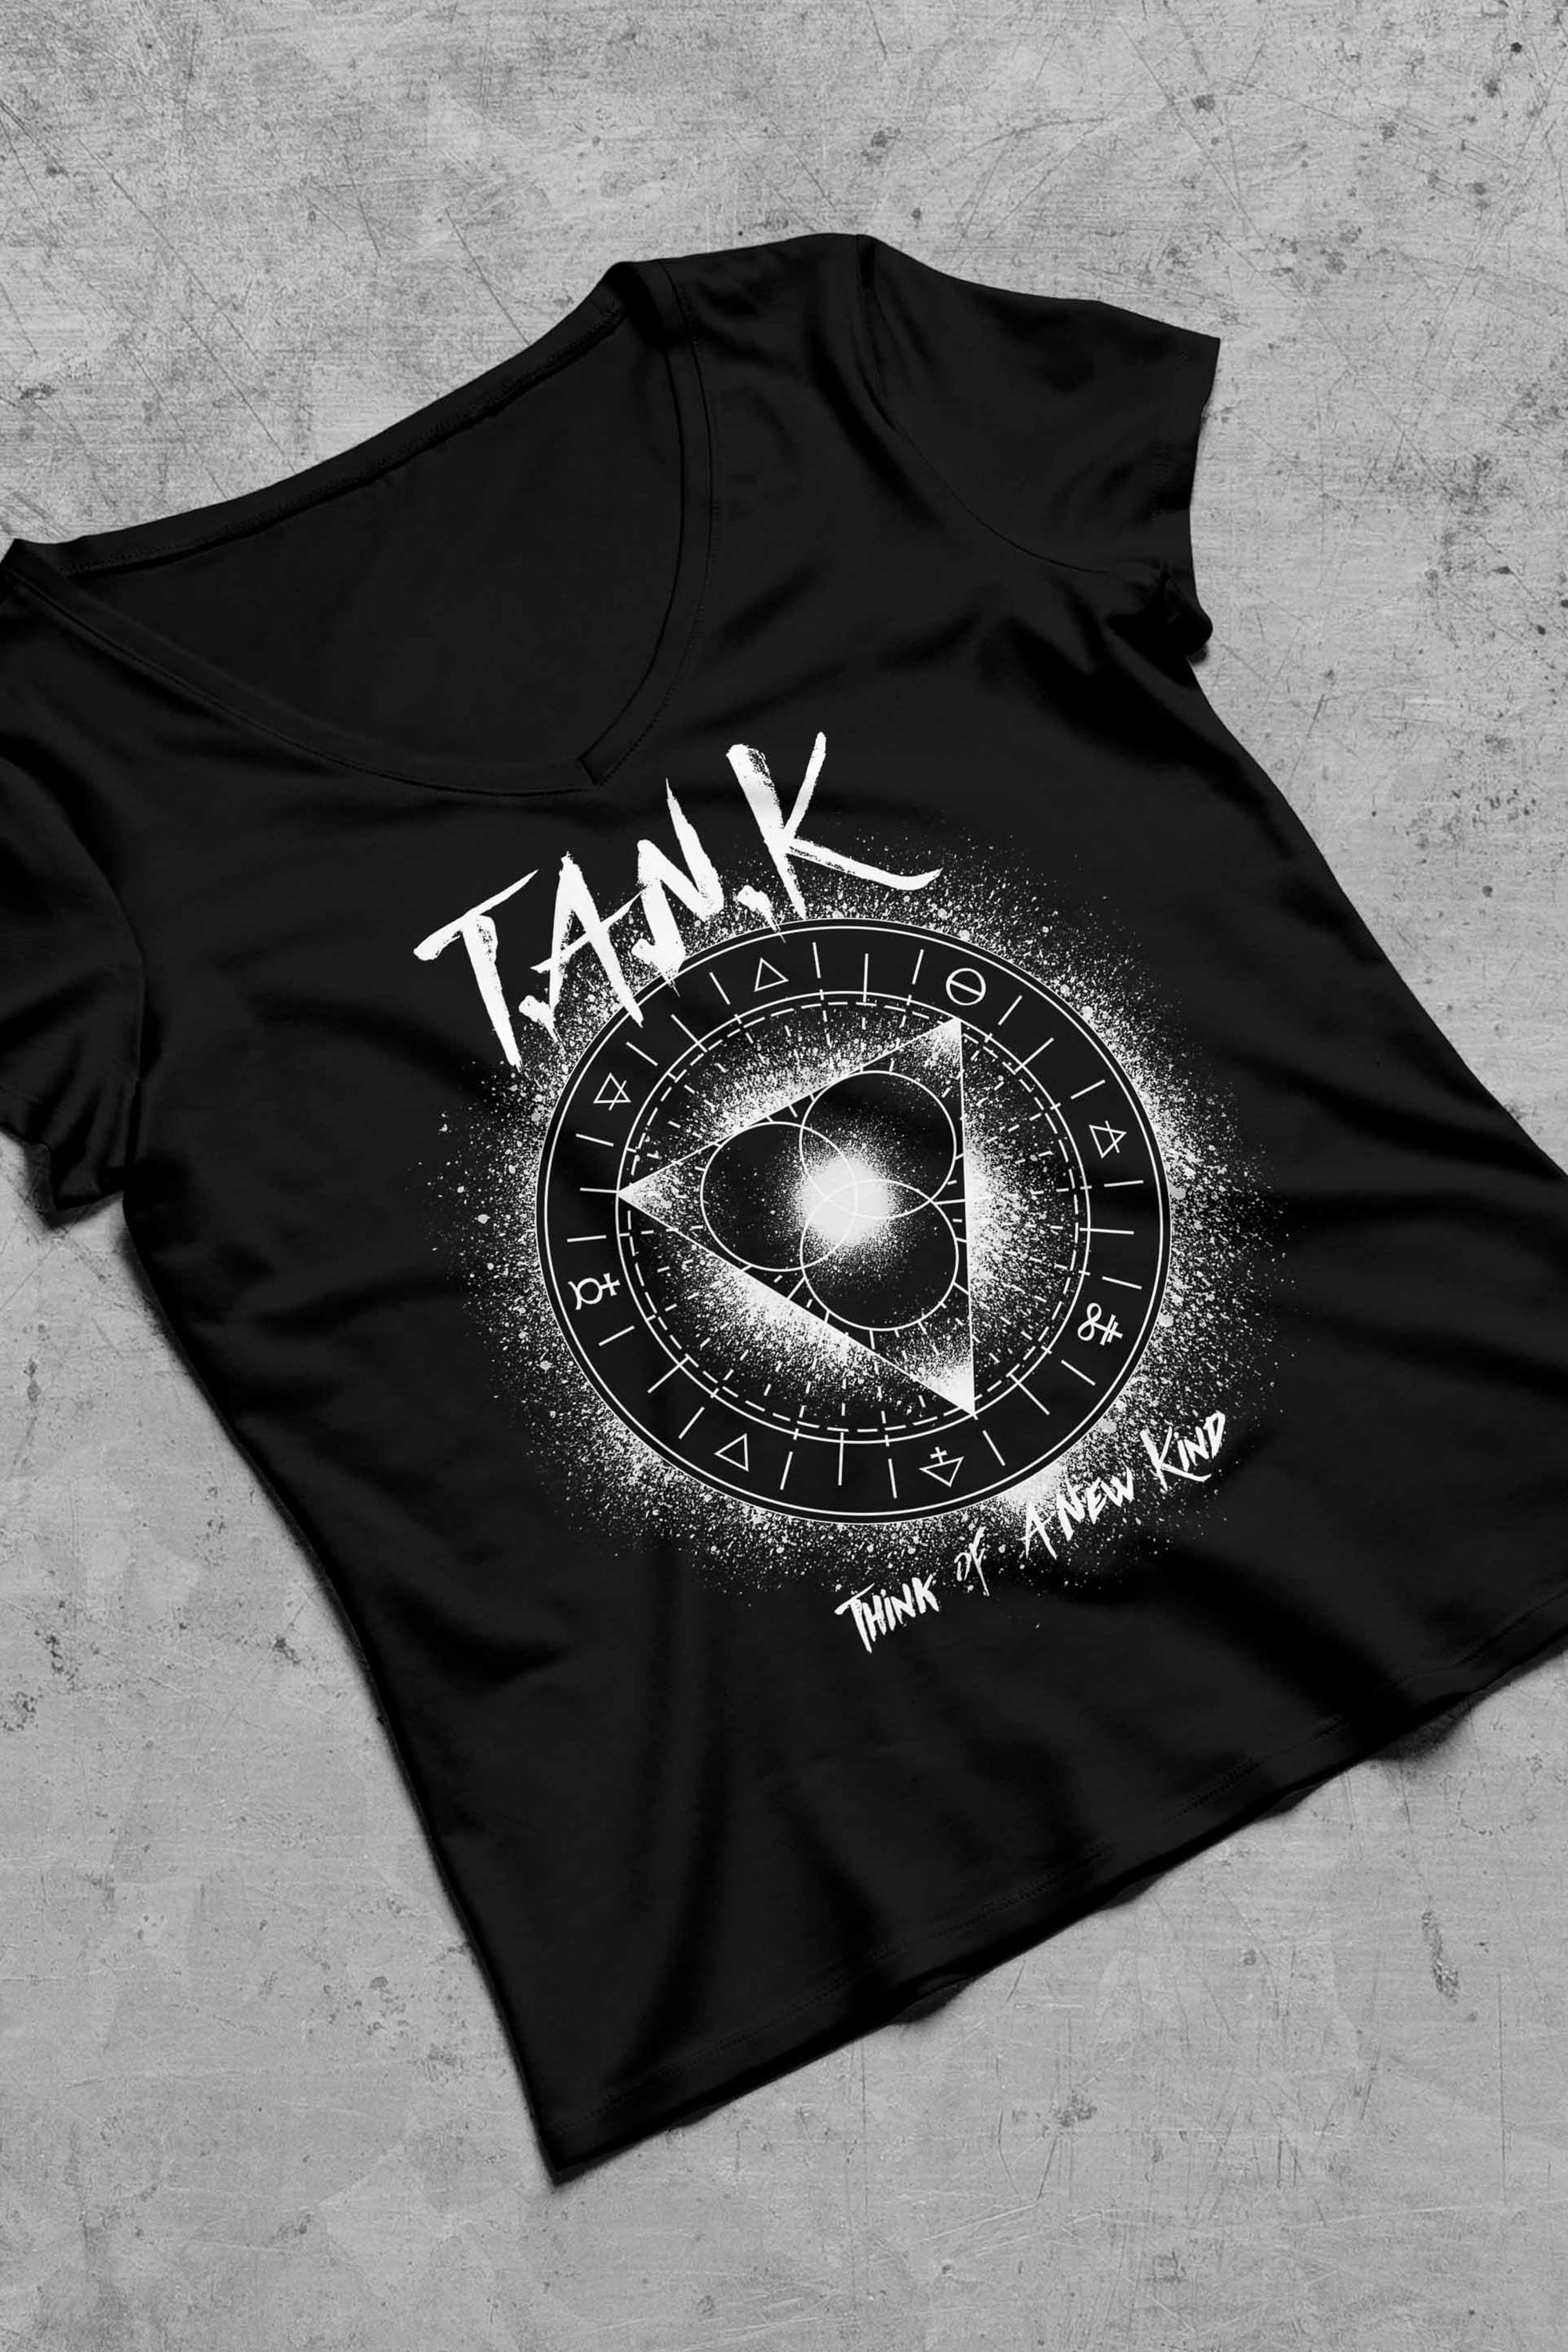 T-Shirt Fille T.A.N.K metal